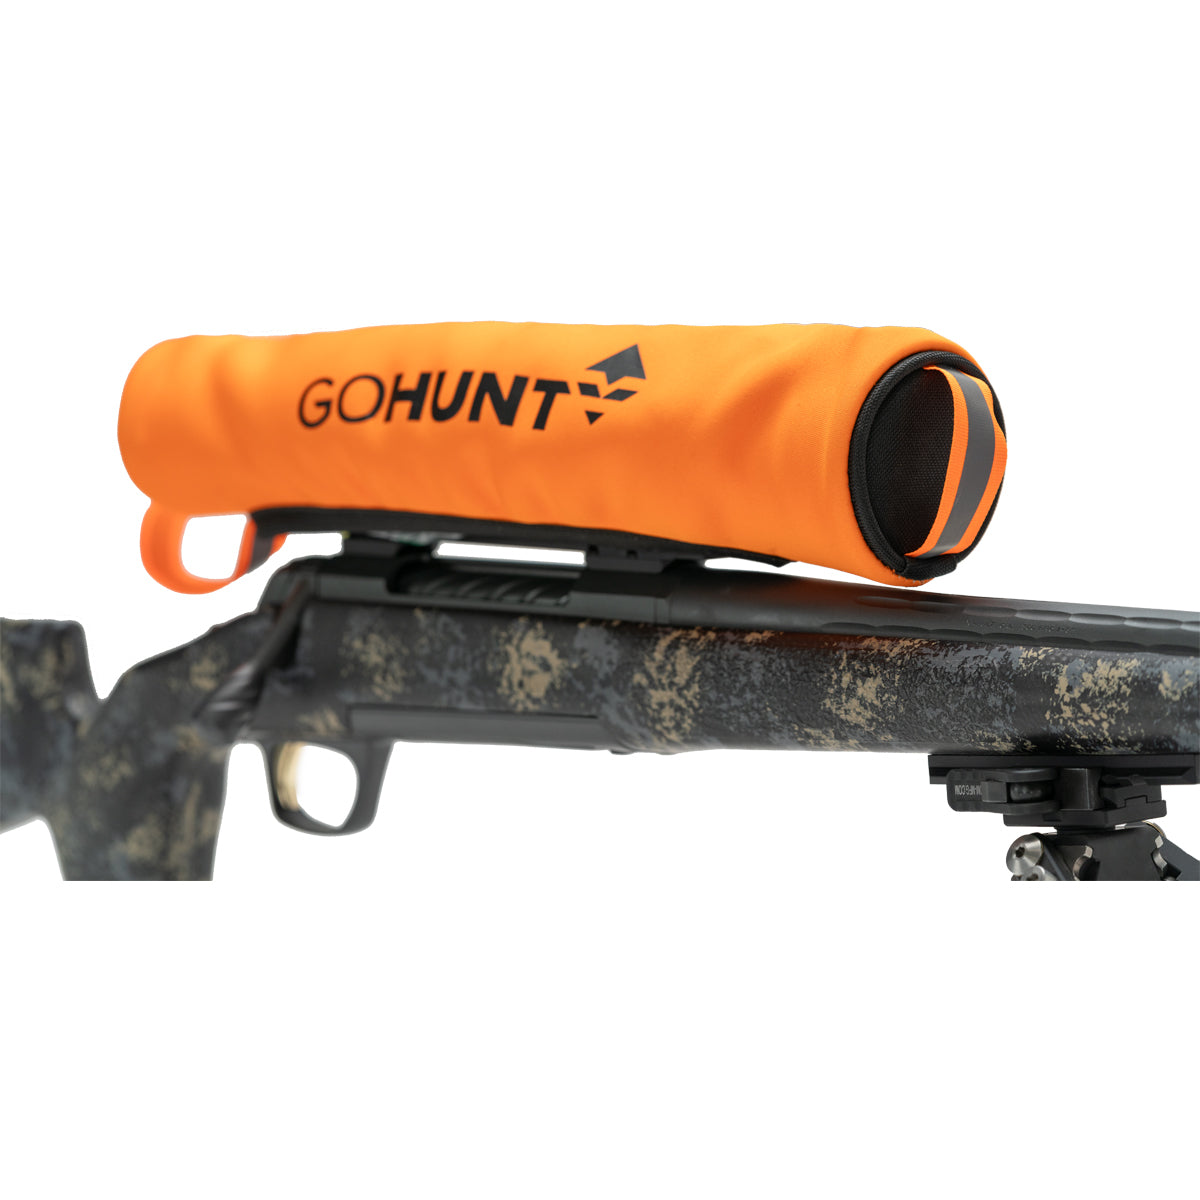 GOHUNT Riflescope Cover in Large / Blaze Orange by GOHUNT | GOHUNT - GOHUNT Shop